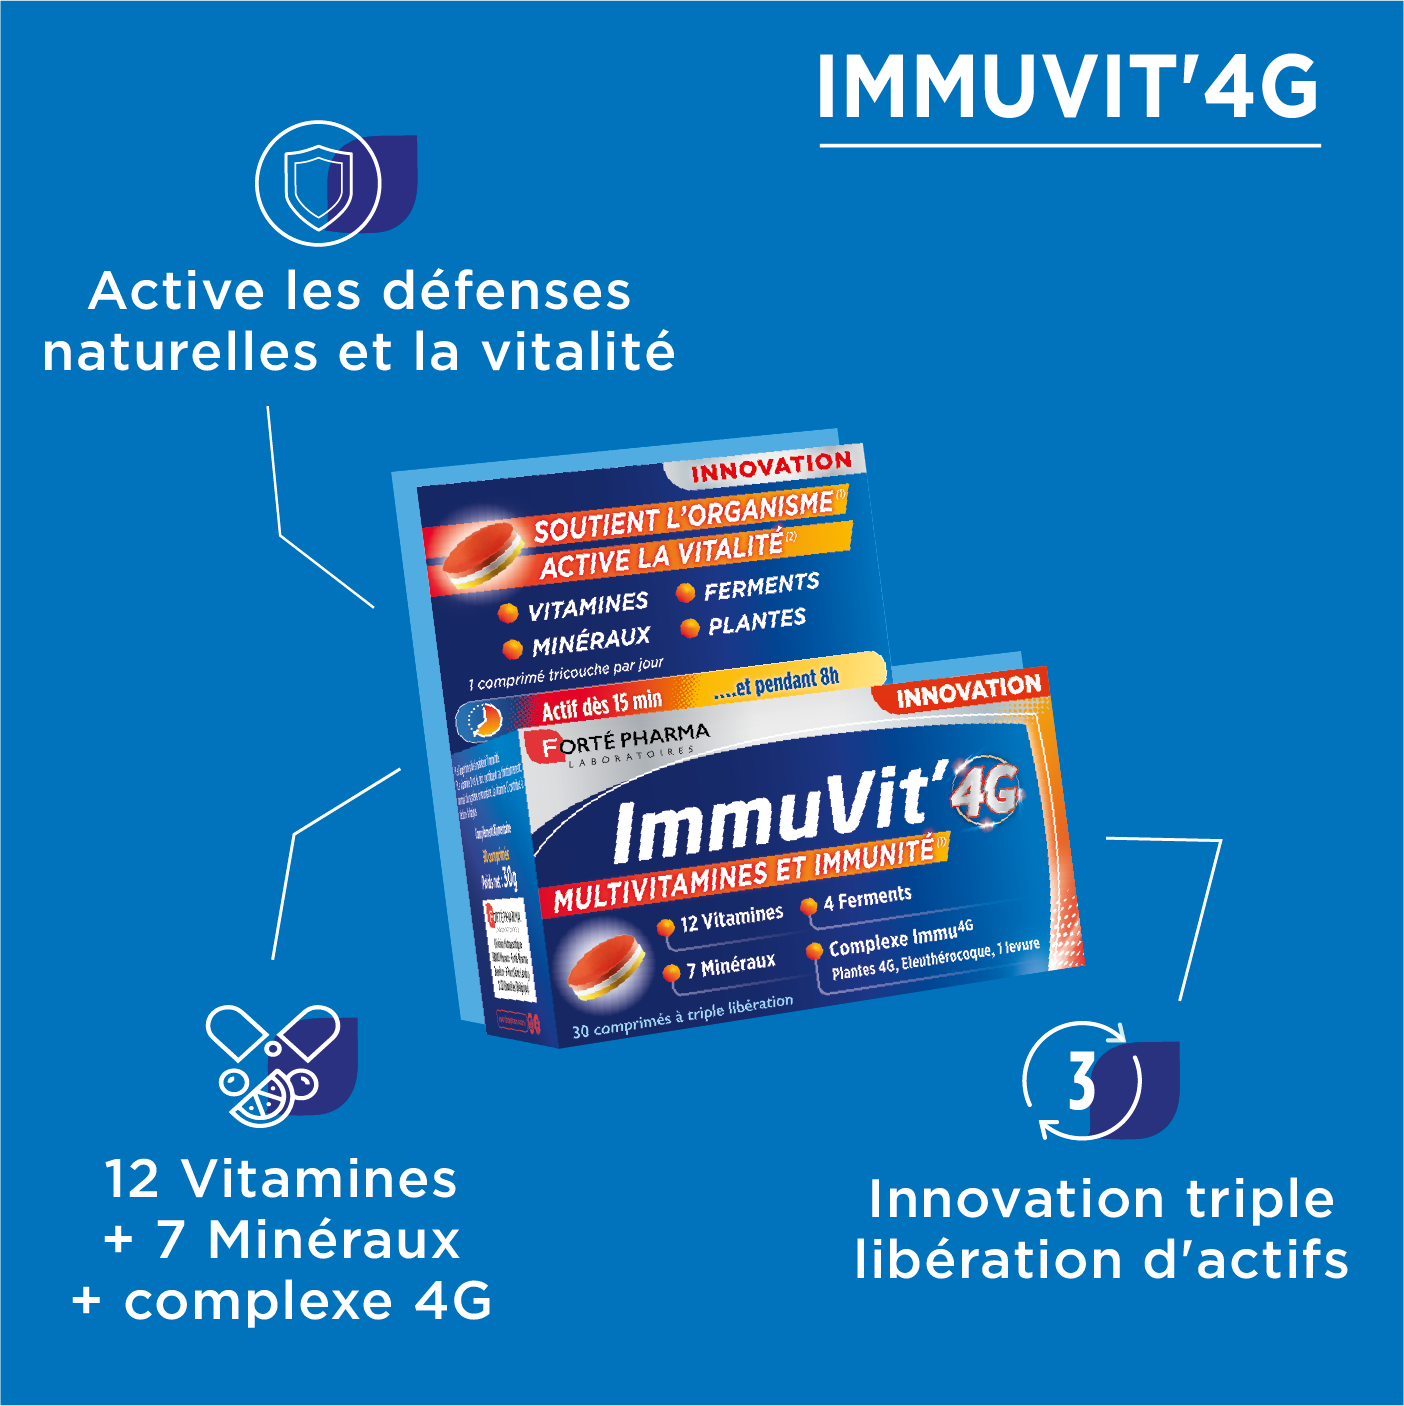 Immuvit 4G immunité énergie vitamines bienfaits